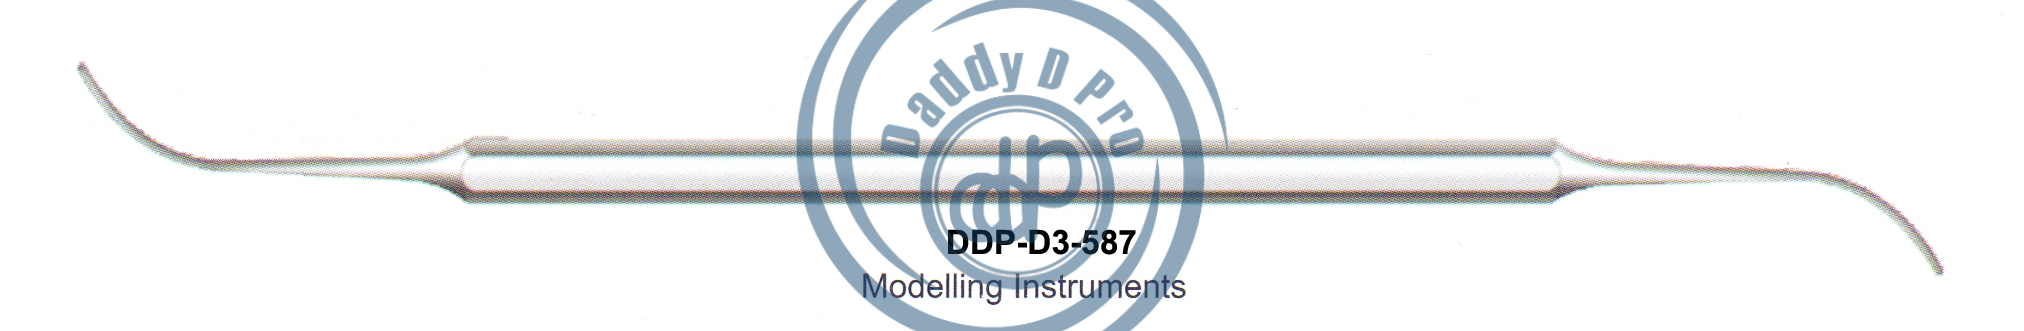 images/DDP-D3-587.png